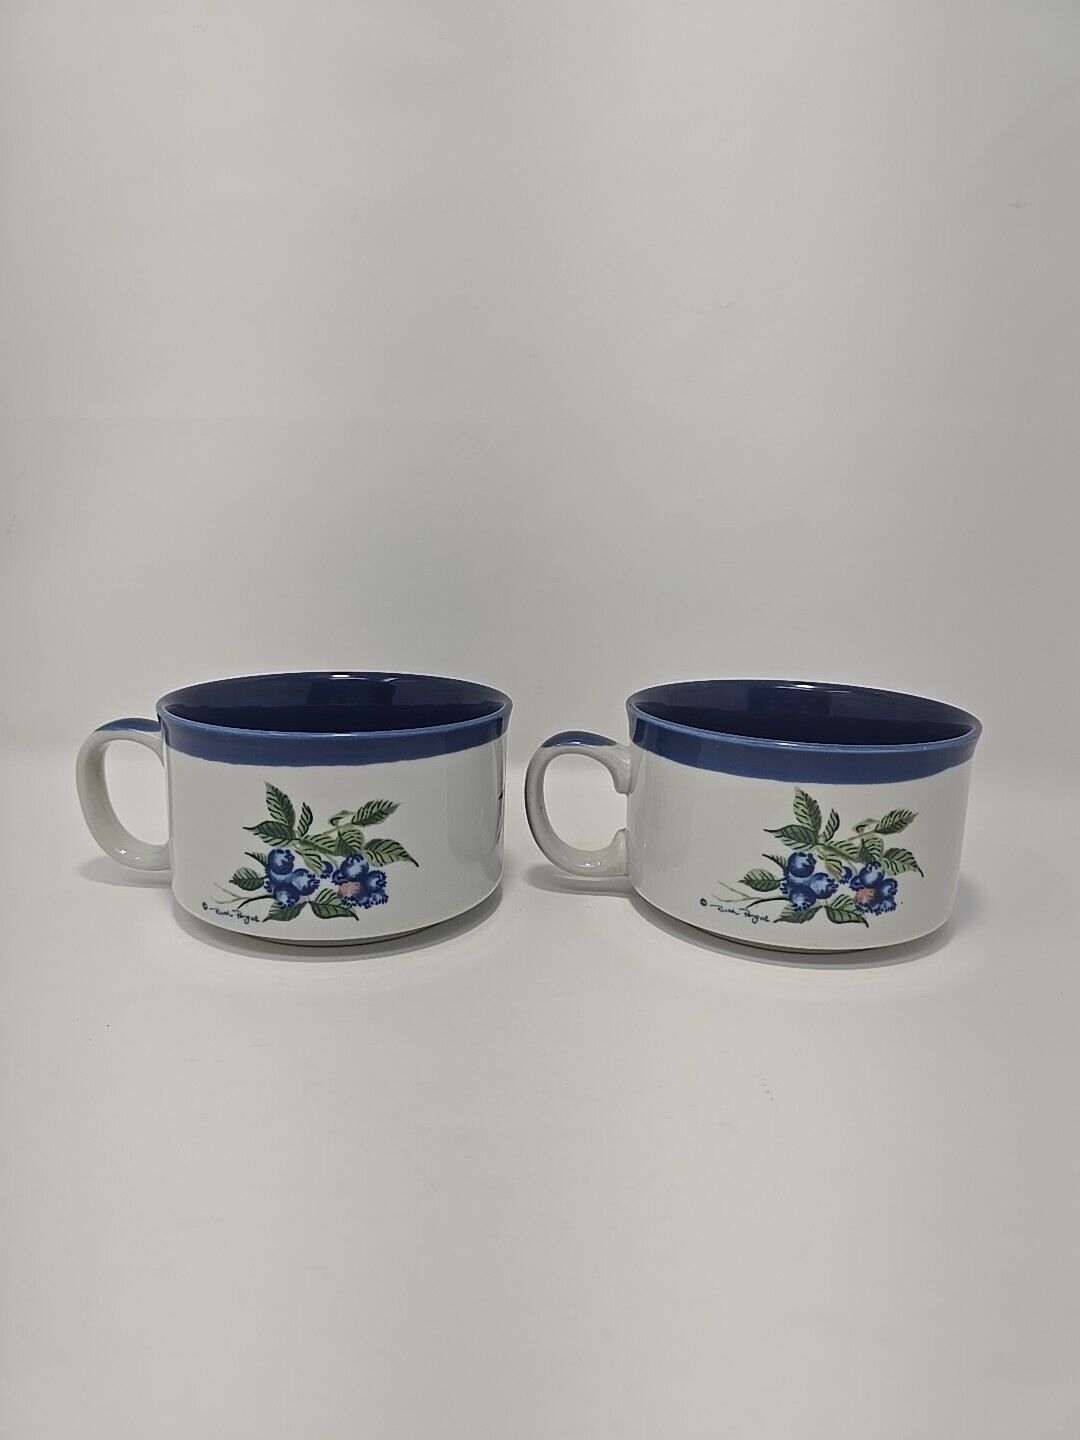 🫐OTAGIRI Blueberry Soup Mugs JAPAN Ruth Pengal Designer (Set of 2) 4.5